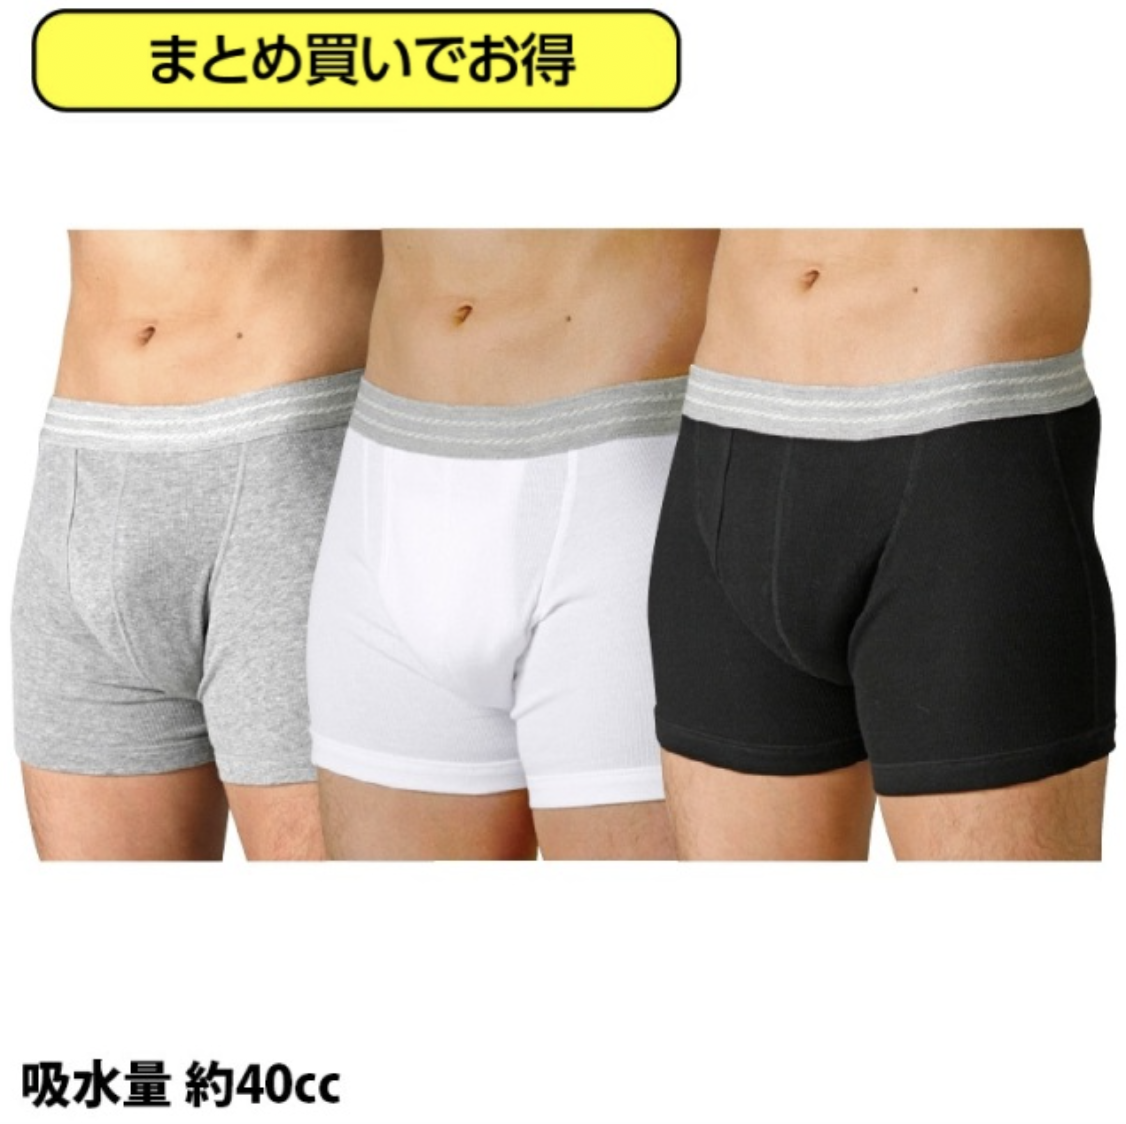 【WDまとめ買い】軽失禁パンツ ウェルドライ 男性用ソフトトランクス(吸水量40cc)